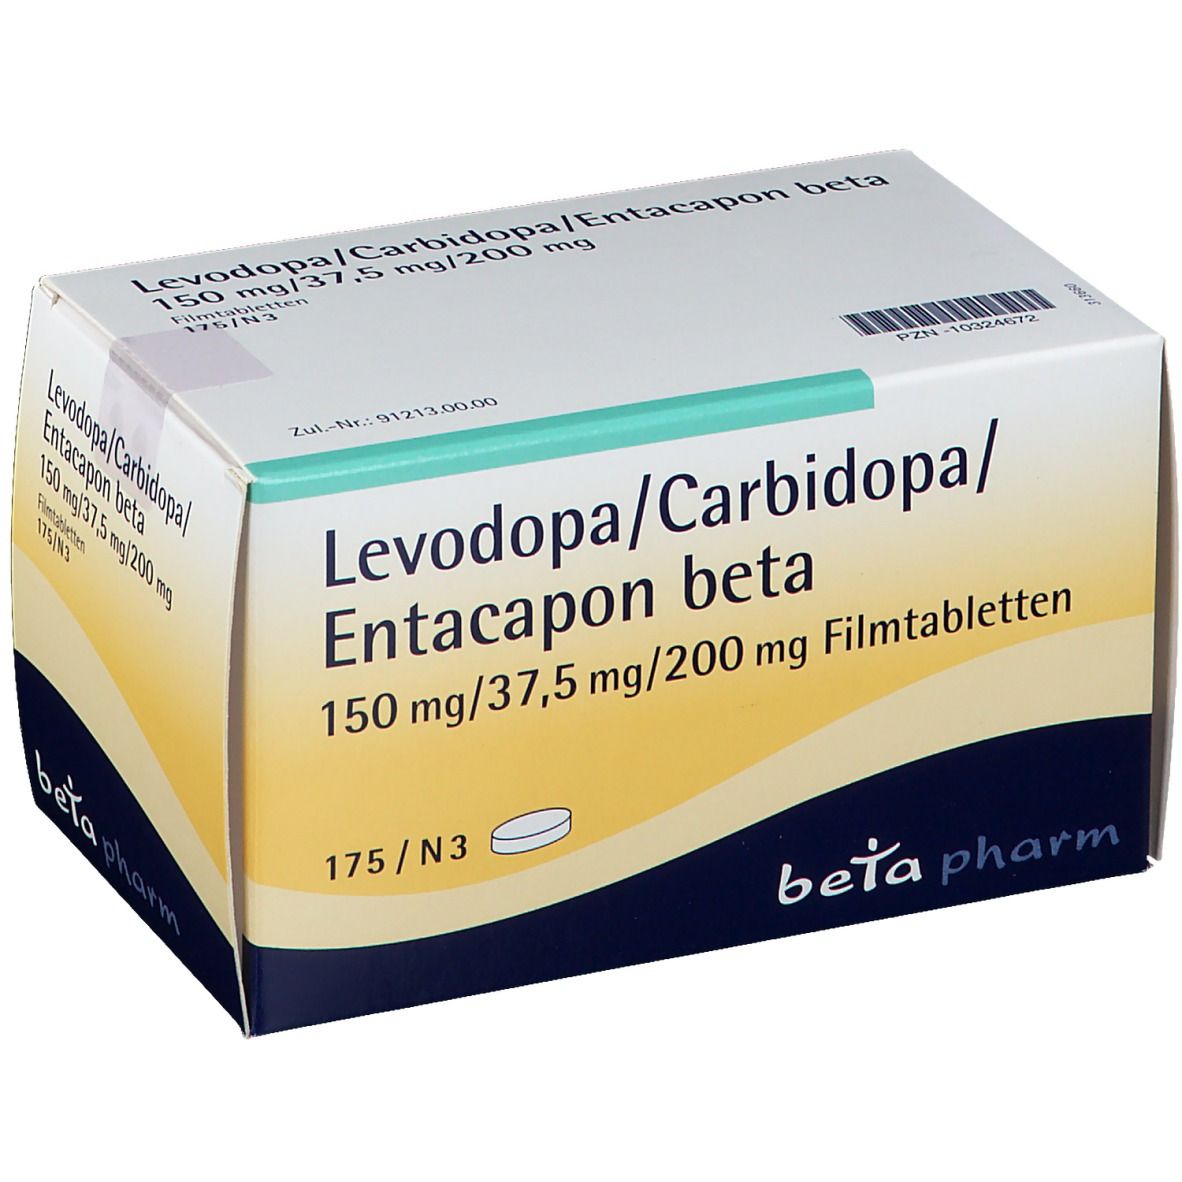 Levodopa/Carbidopa/Entacapon beta 150 mg/37,5 mg/200 mg